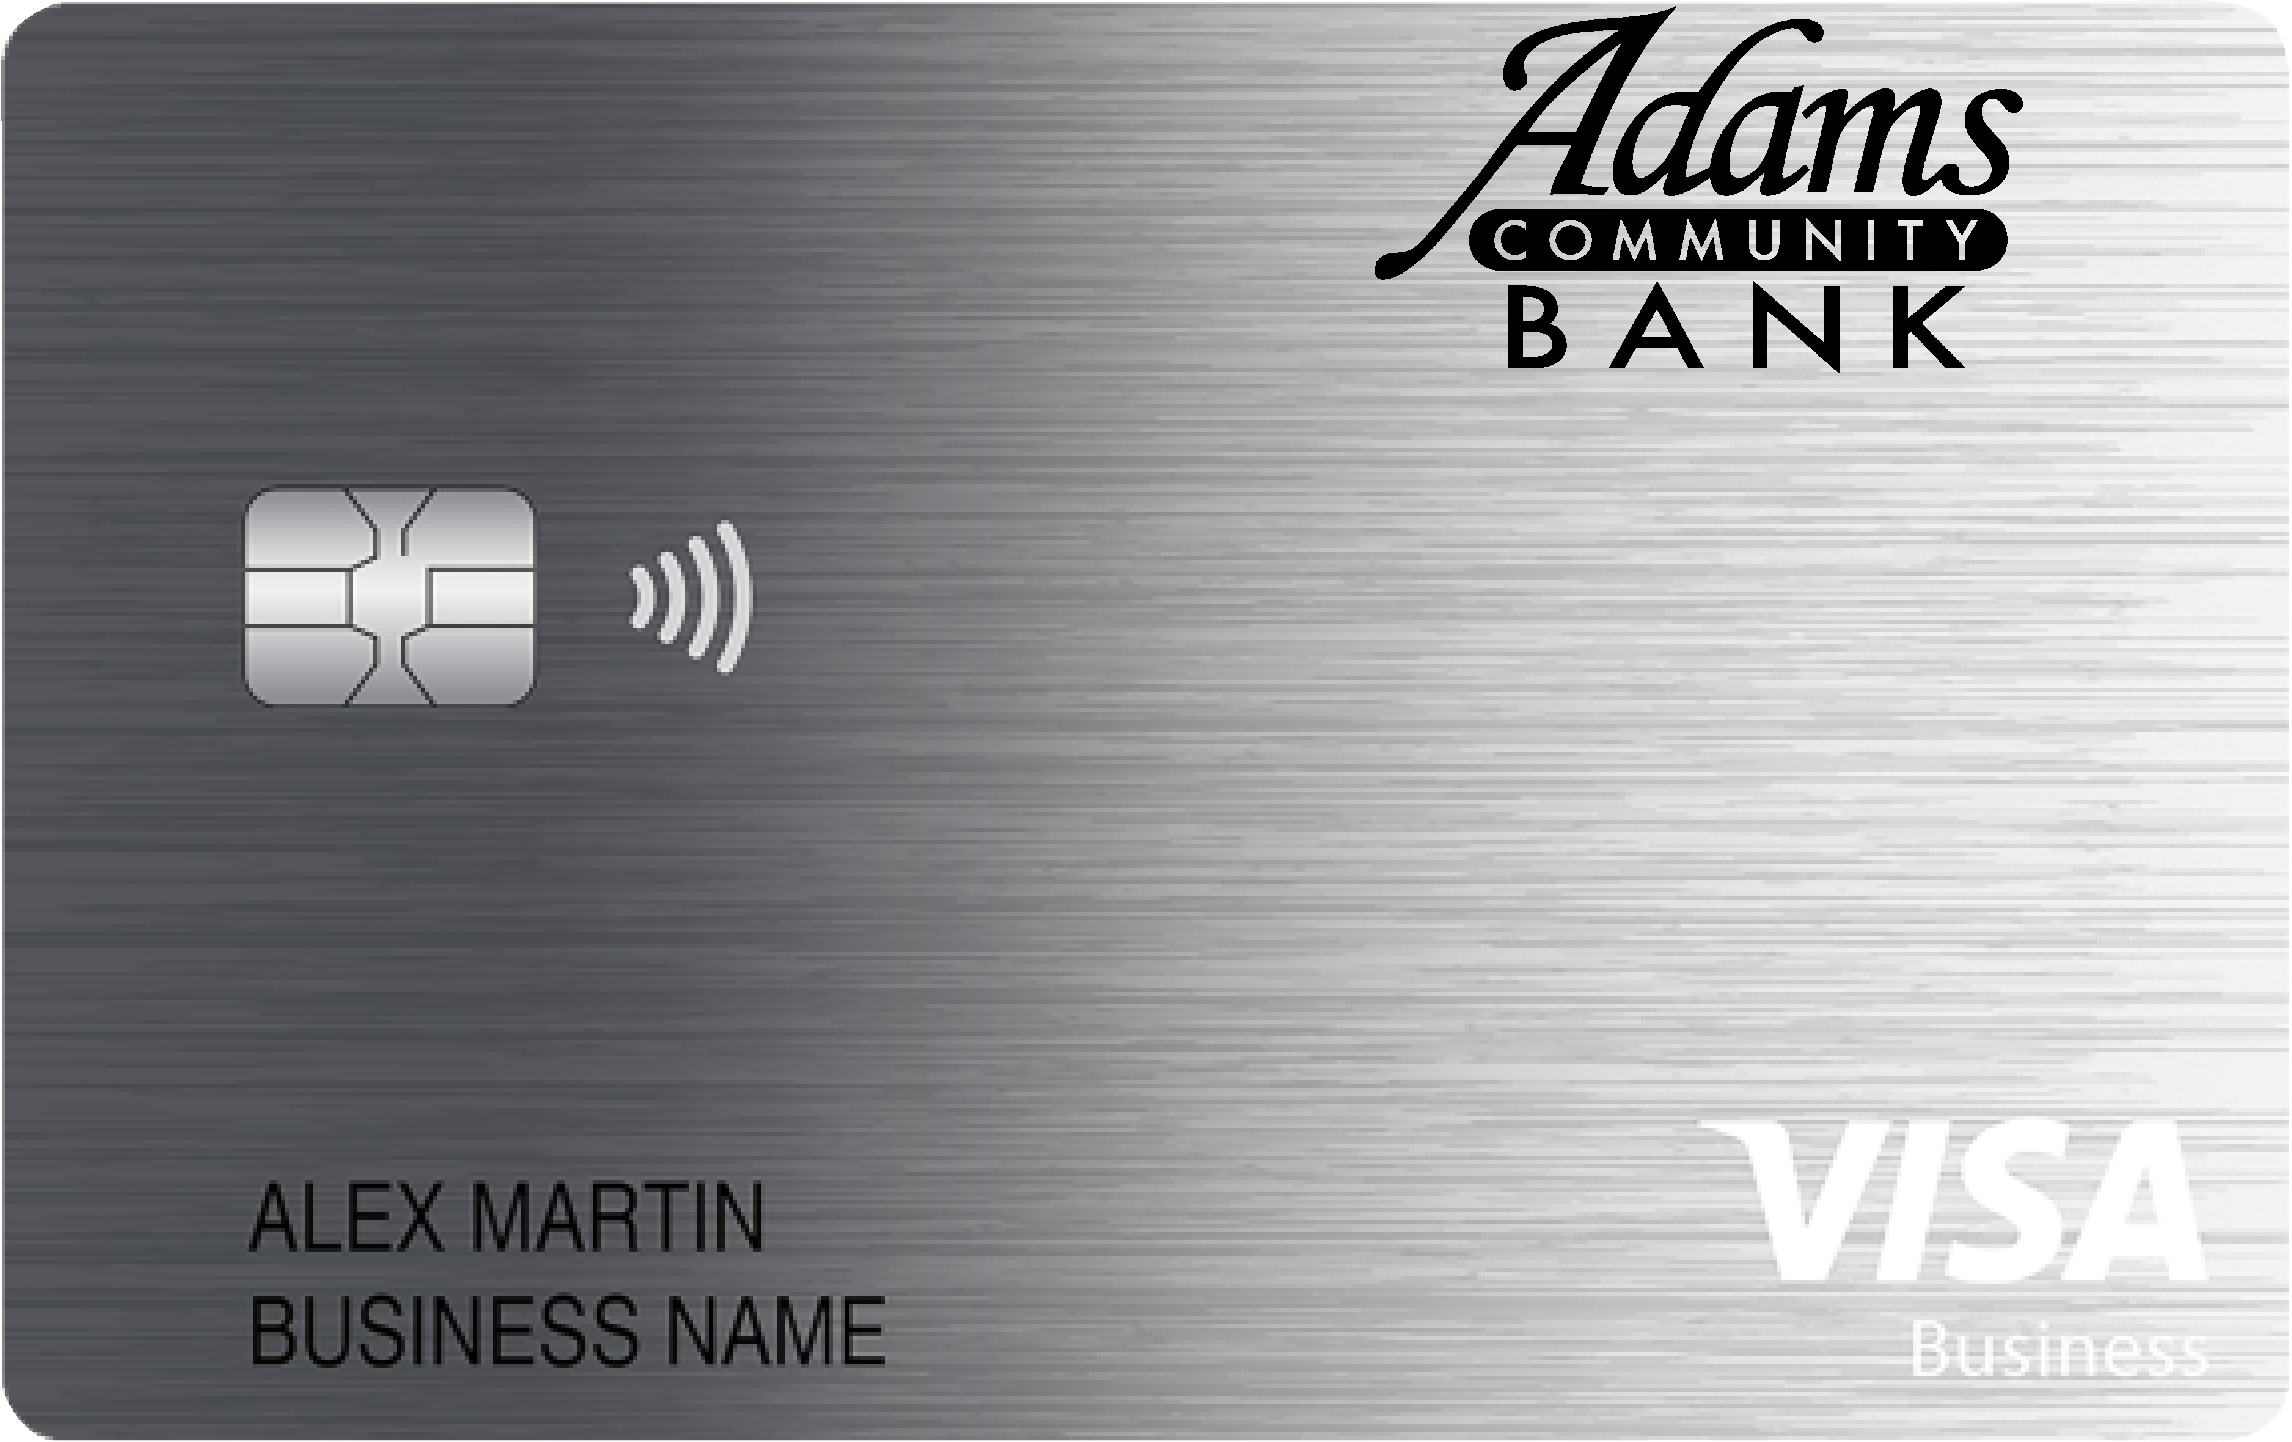 Adams Community Bank Business Cash Preferred Card